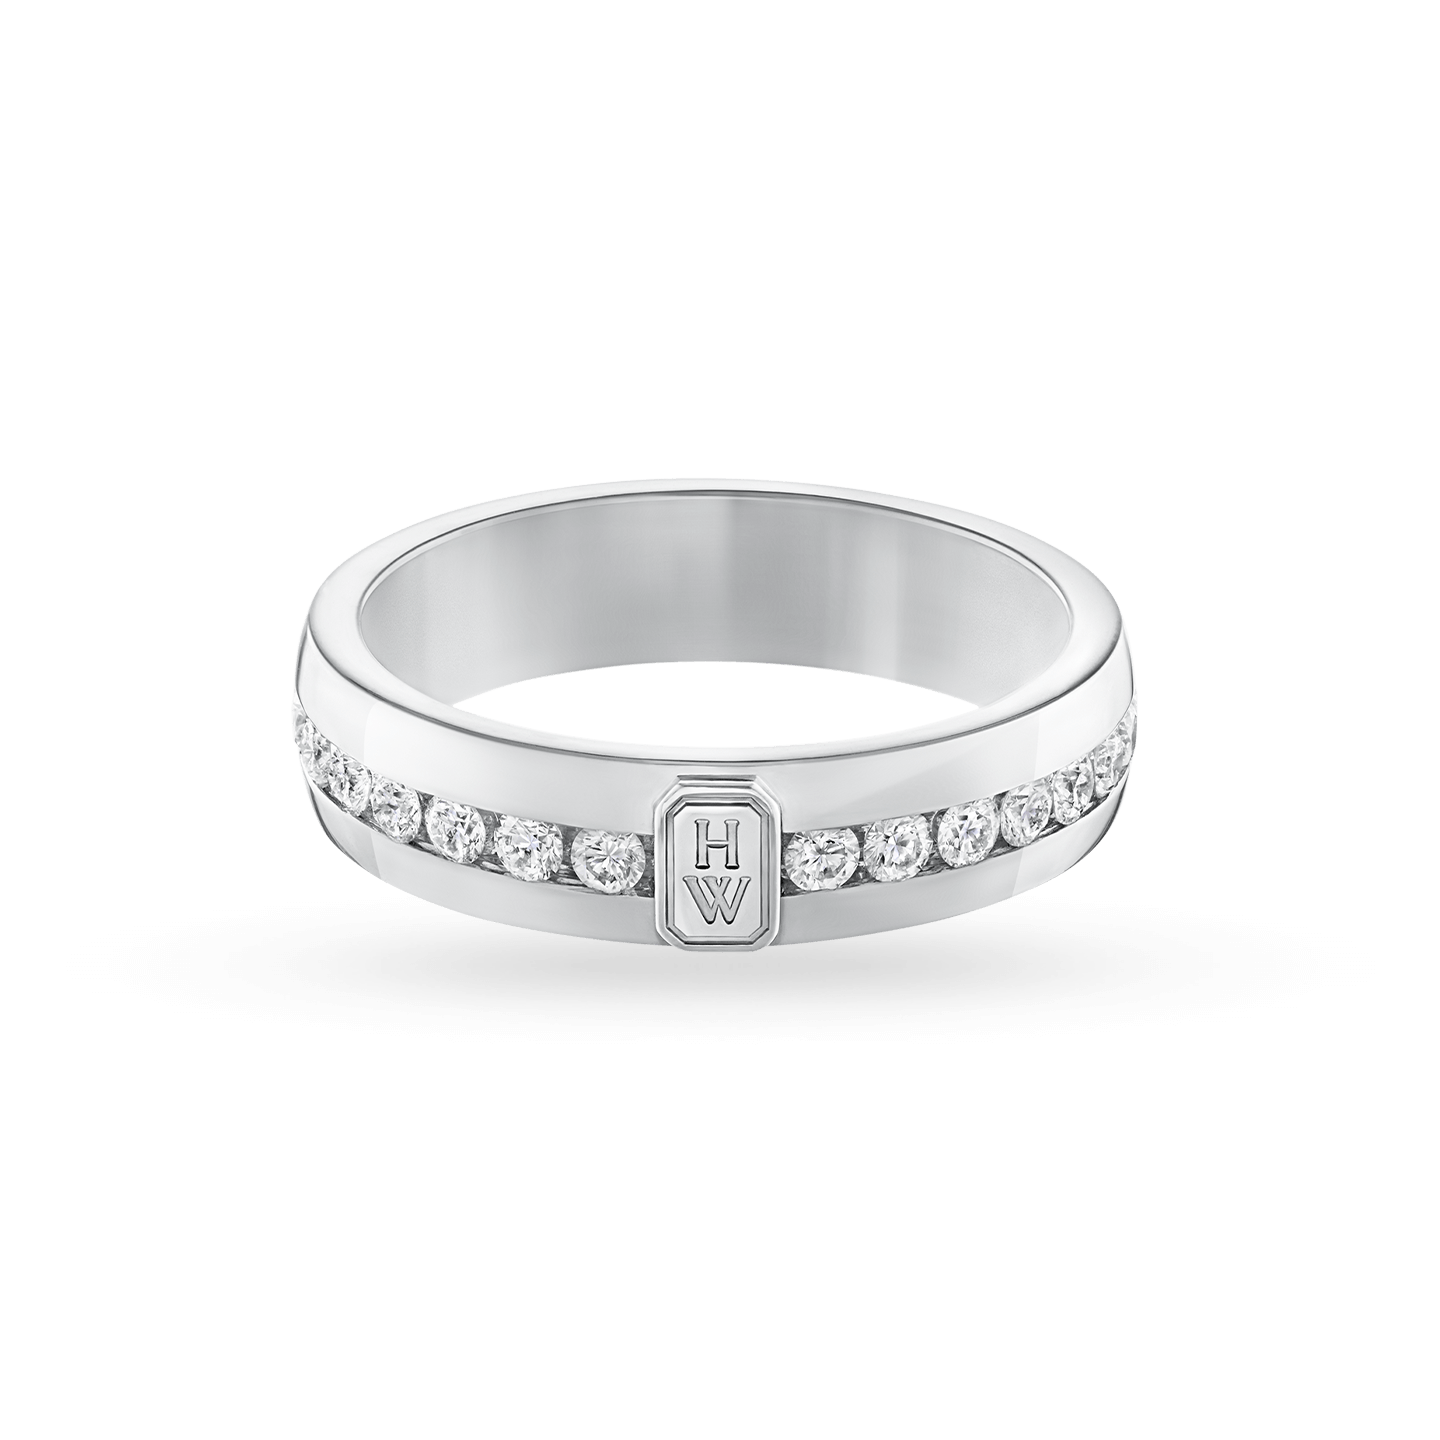 HW Logo White Gold Diamond Ring, Product Image 2